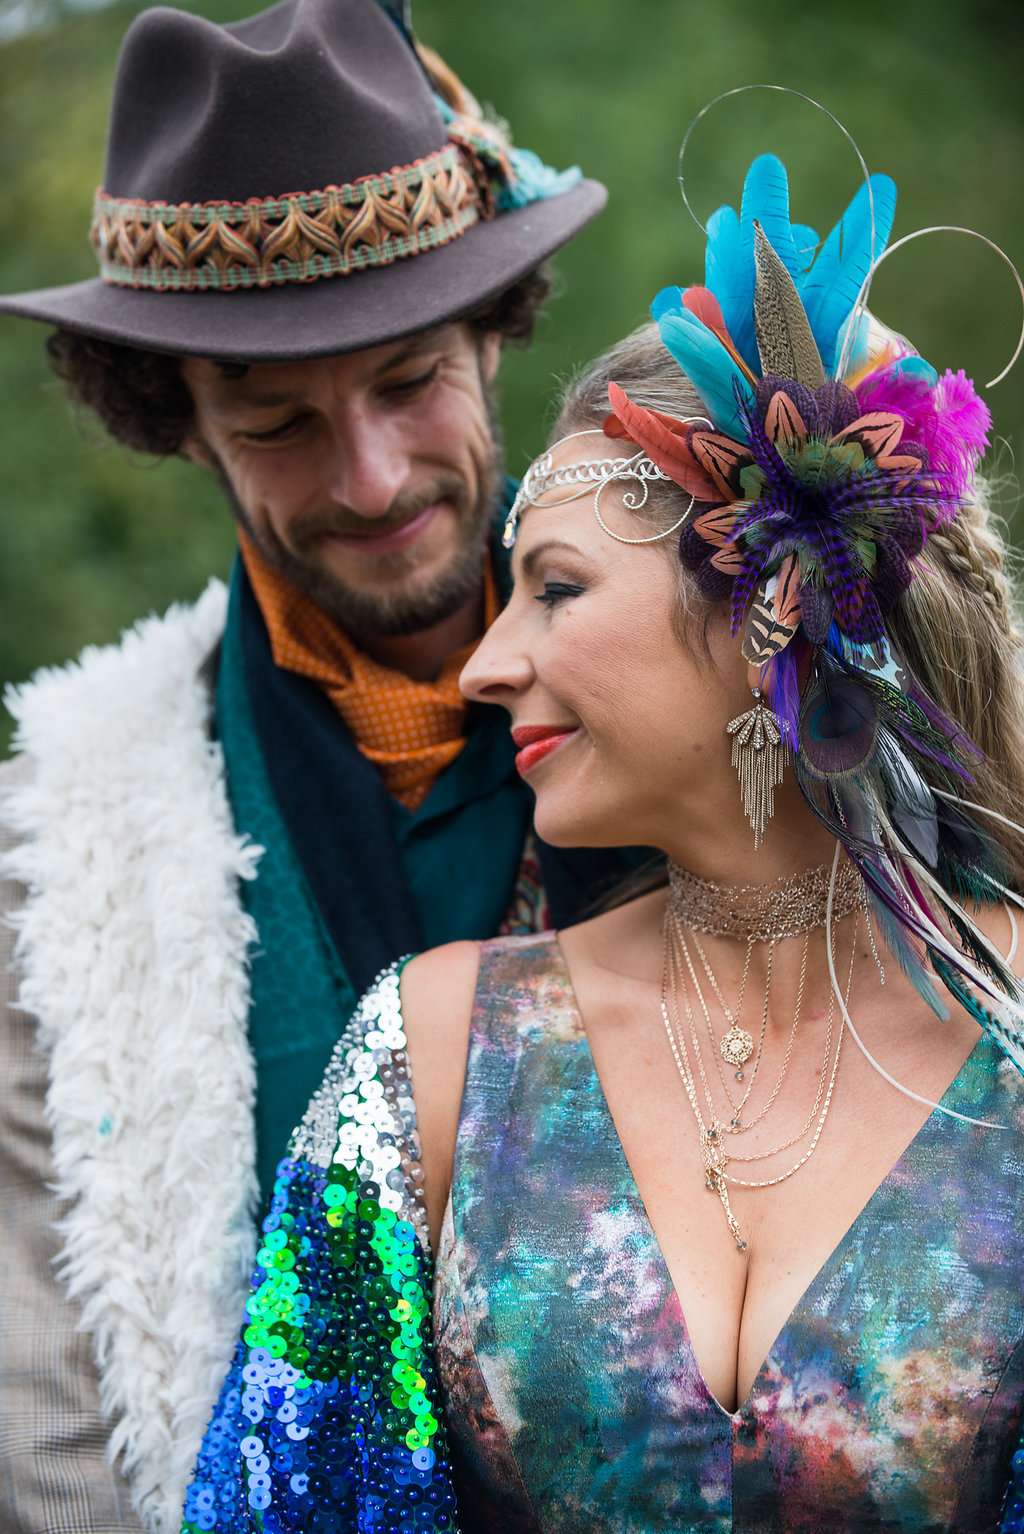 https://www.rocknrollbride.com/wp-content/uploads/2018/12/Boho-Hippy-Festival-Wedding-with-a-Shamanic-Ceremony-49.jpg